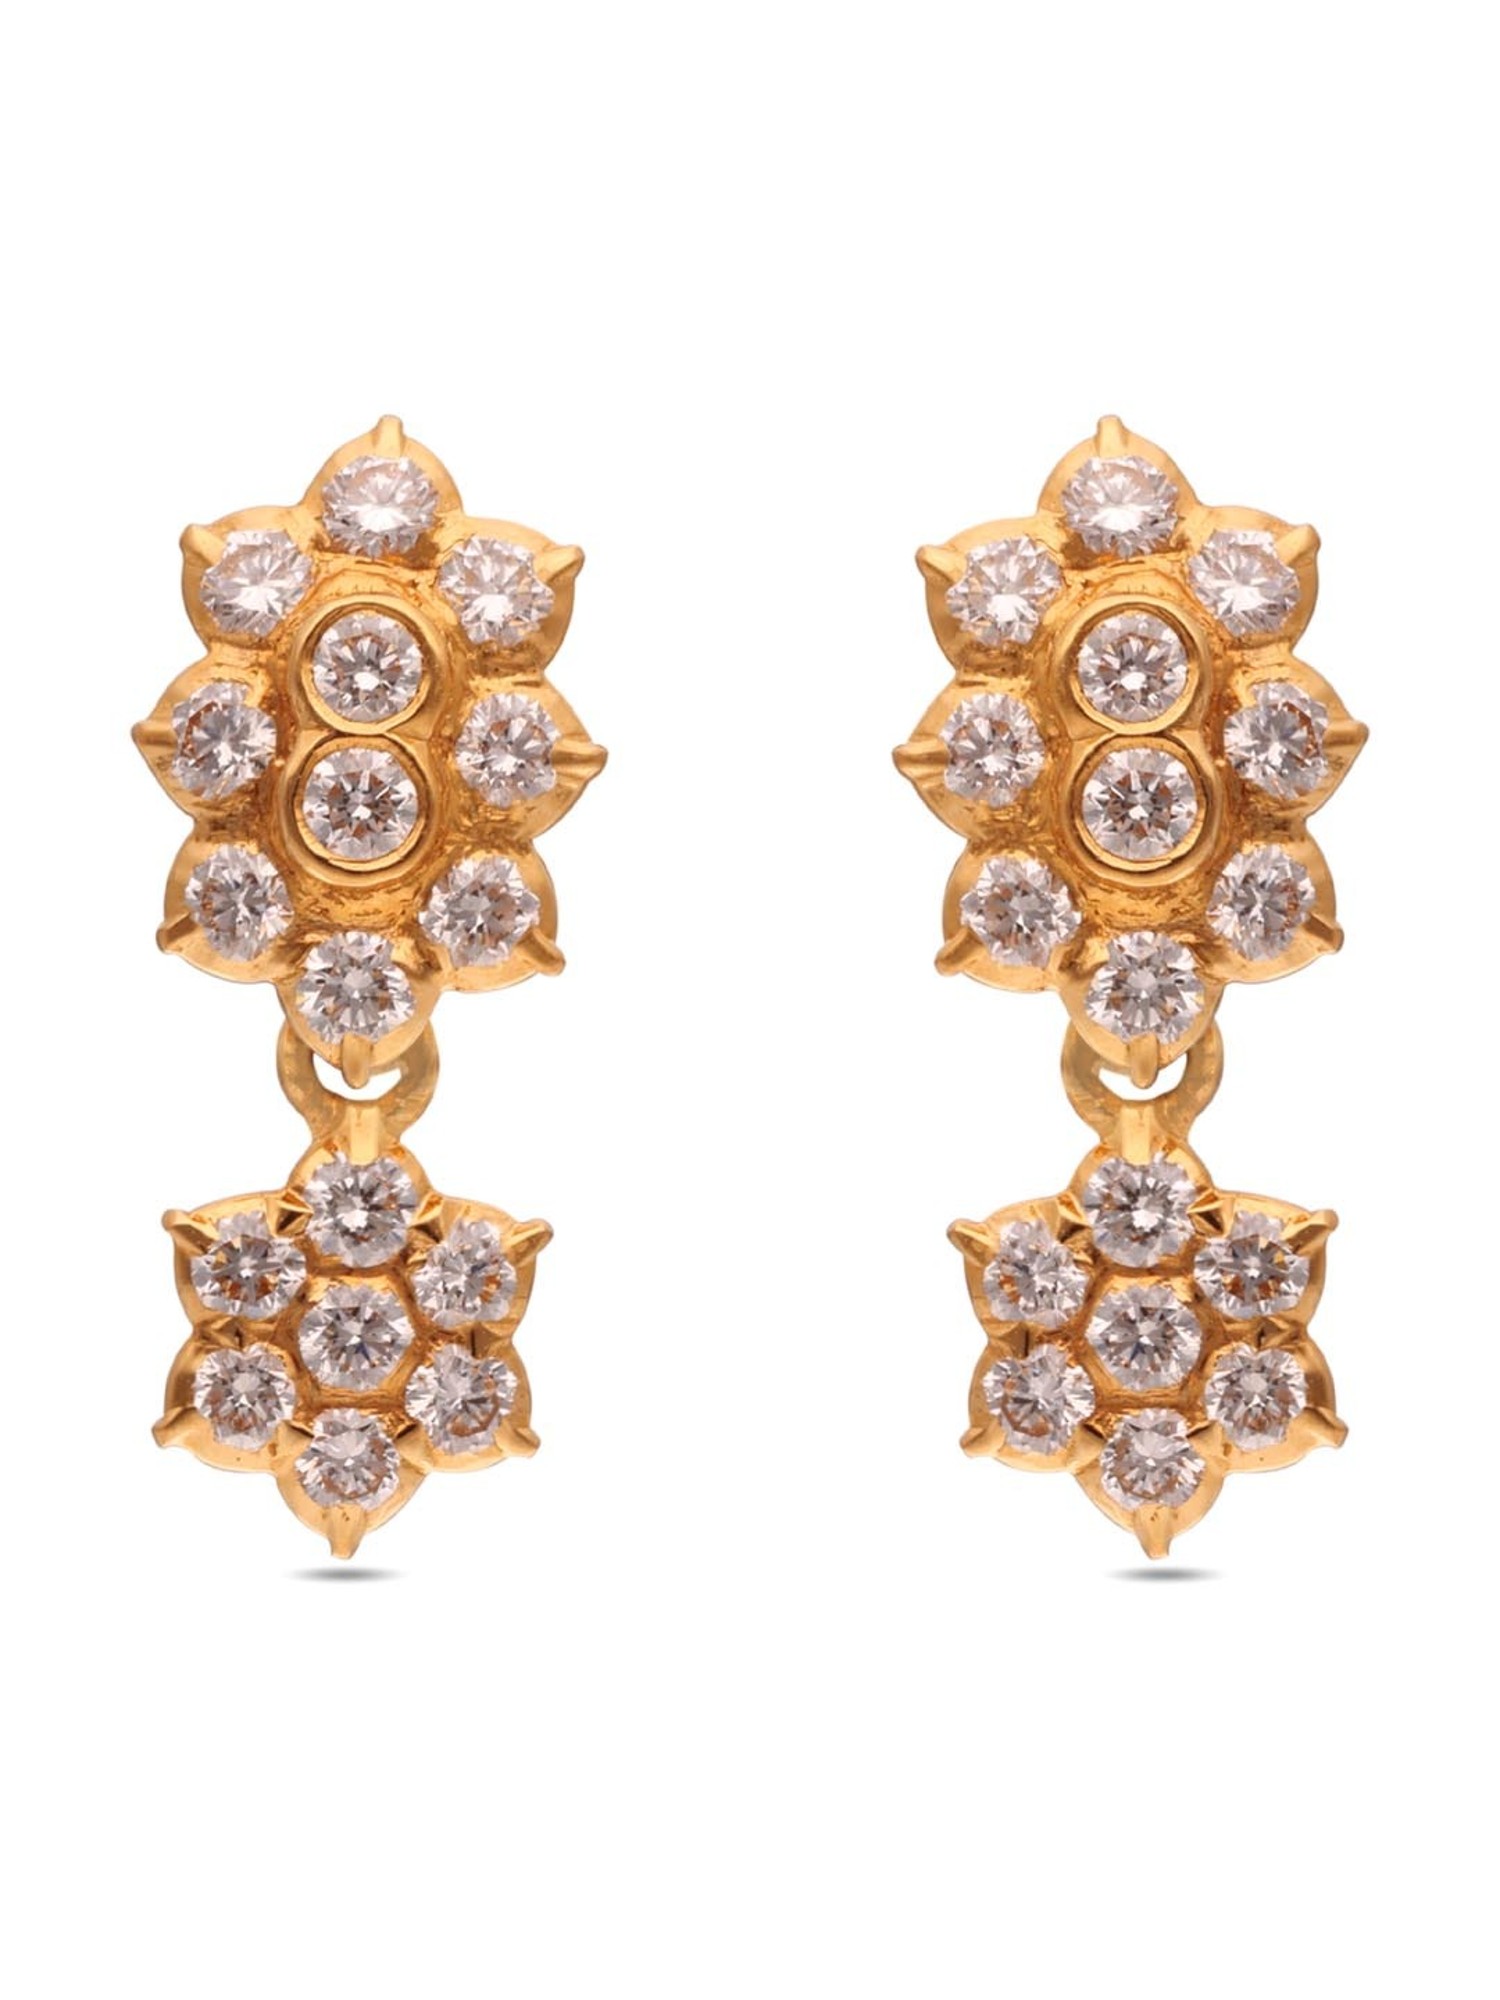 Details more than 100 silver stud earrings grt latest - seven.edu.vn